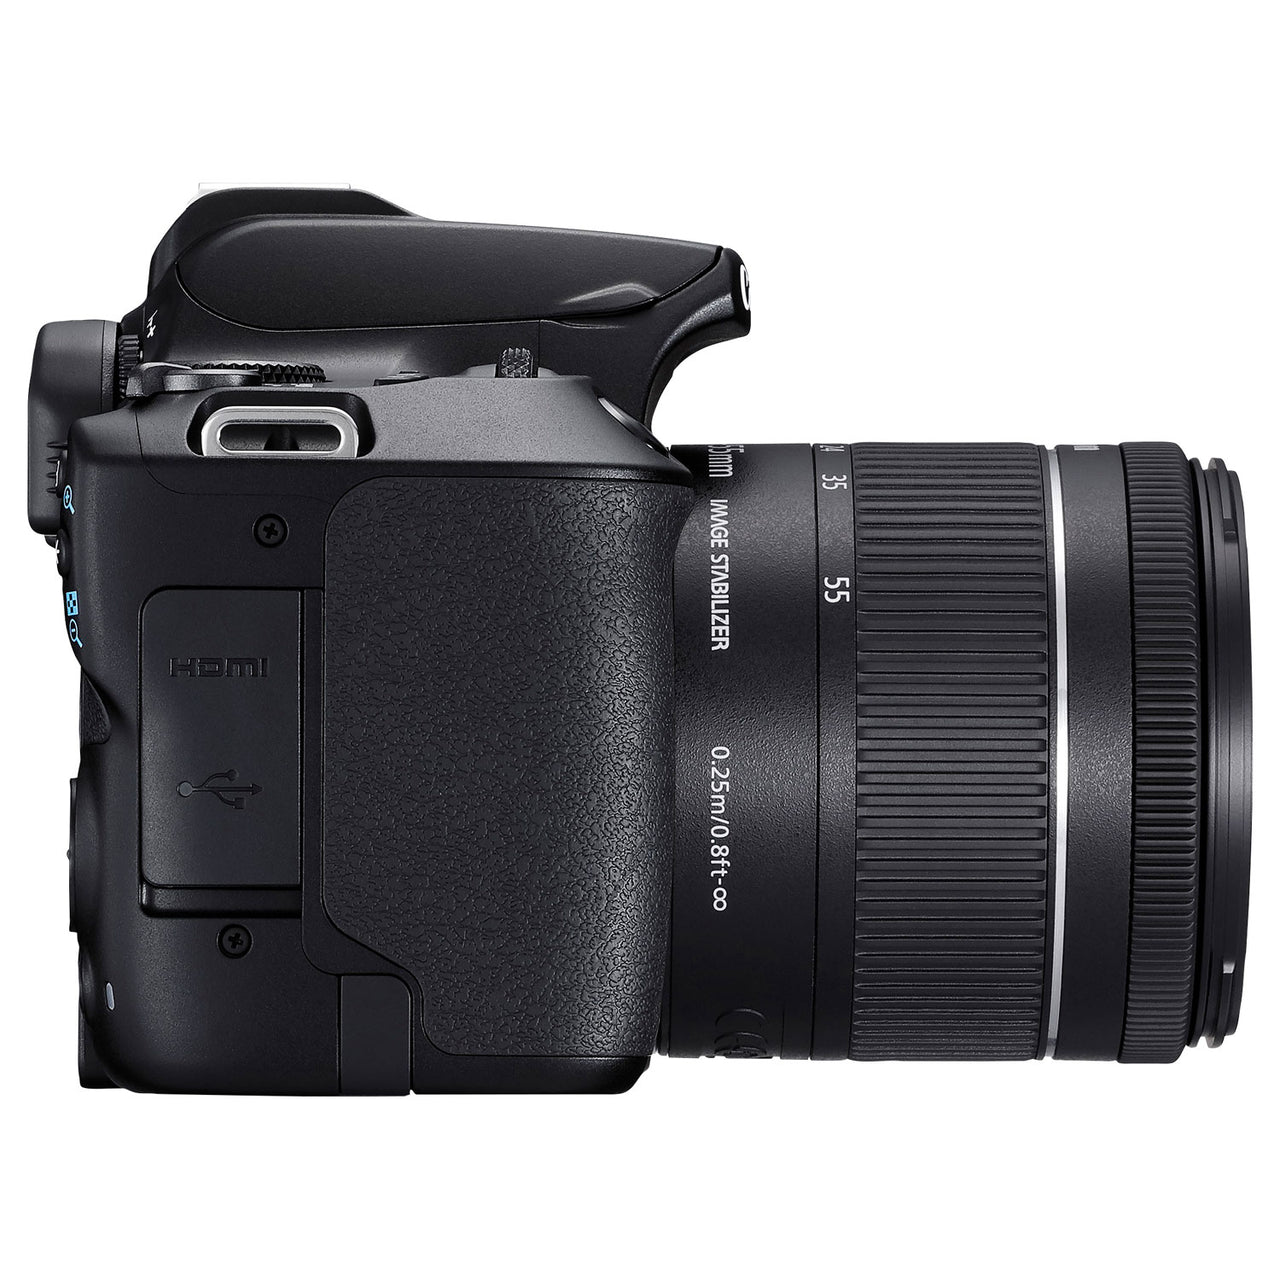 Canon EOS Rebel SL3 DSLR Camera with 18-55mm Lens Kit - Black